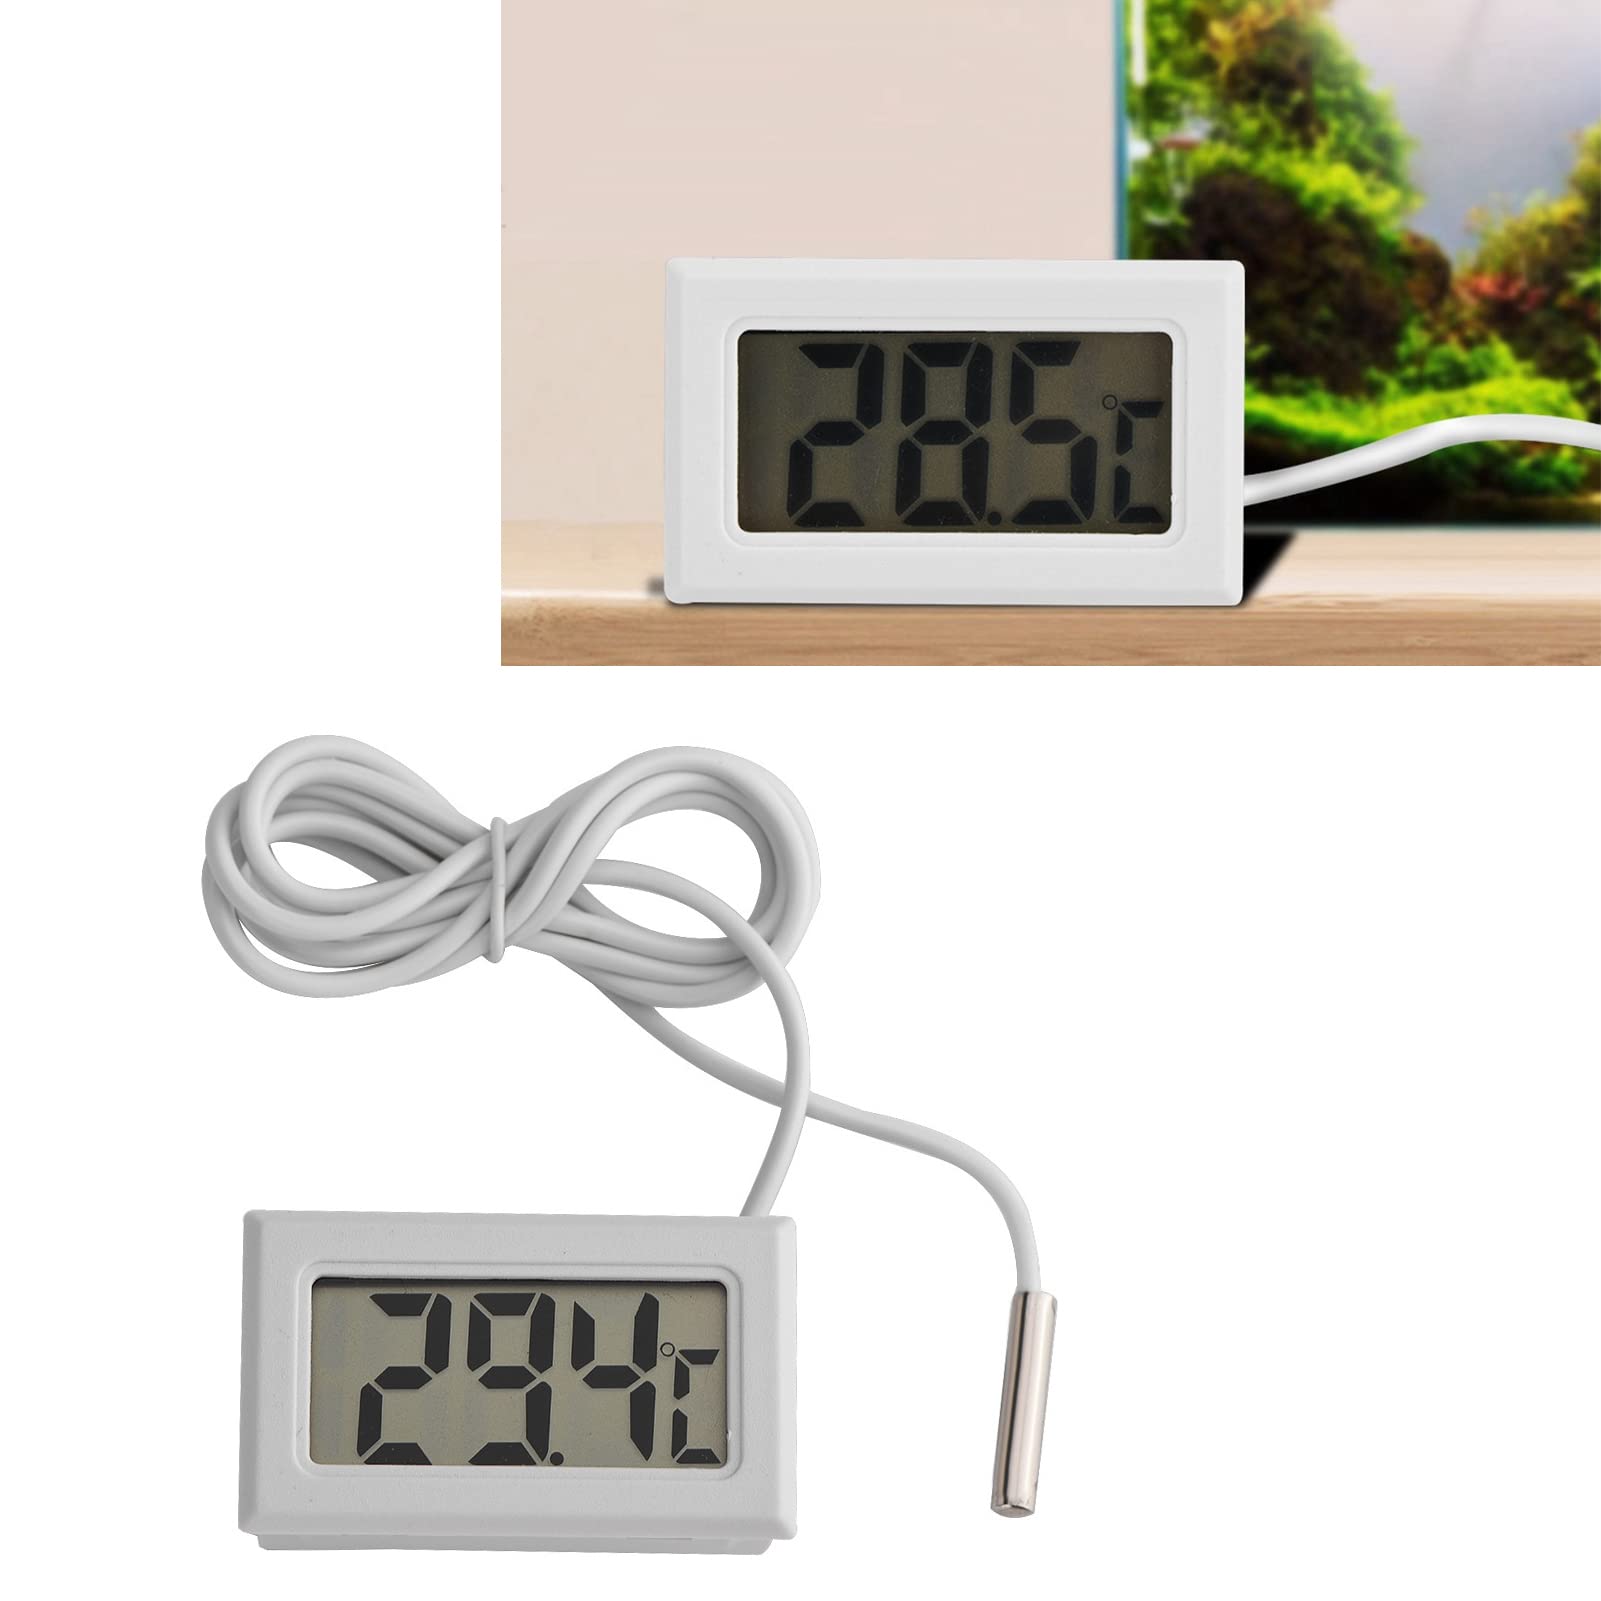 Refrigerator Fridge Thermometer, Mini LED Display Digital Temperature Meter Probe Sensor Digital LCD Thermometer